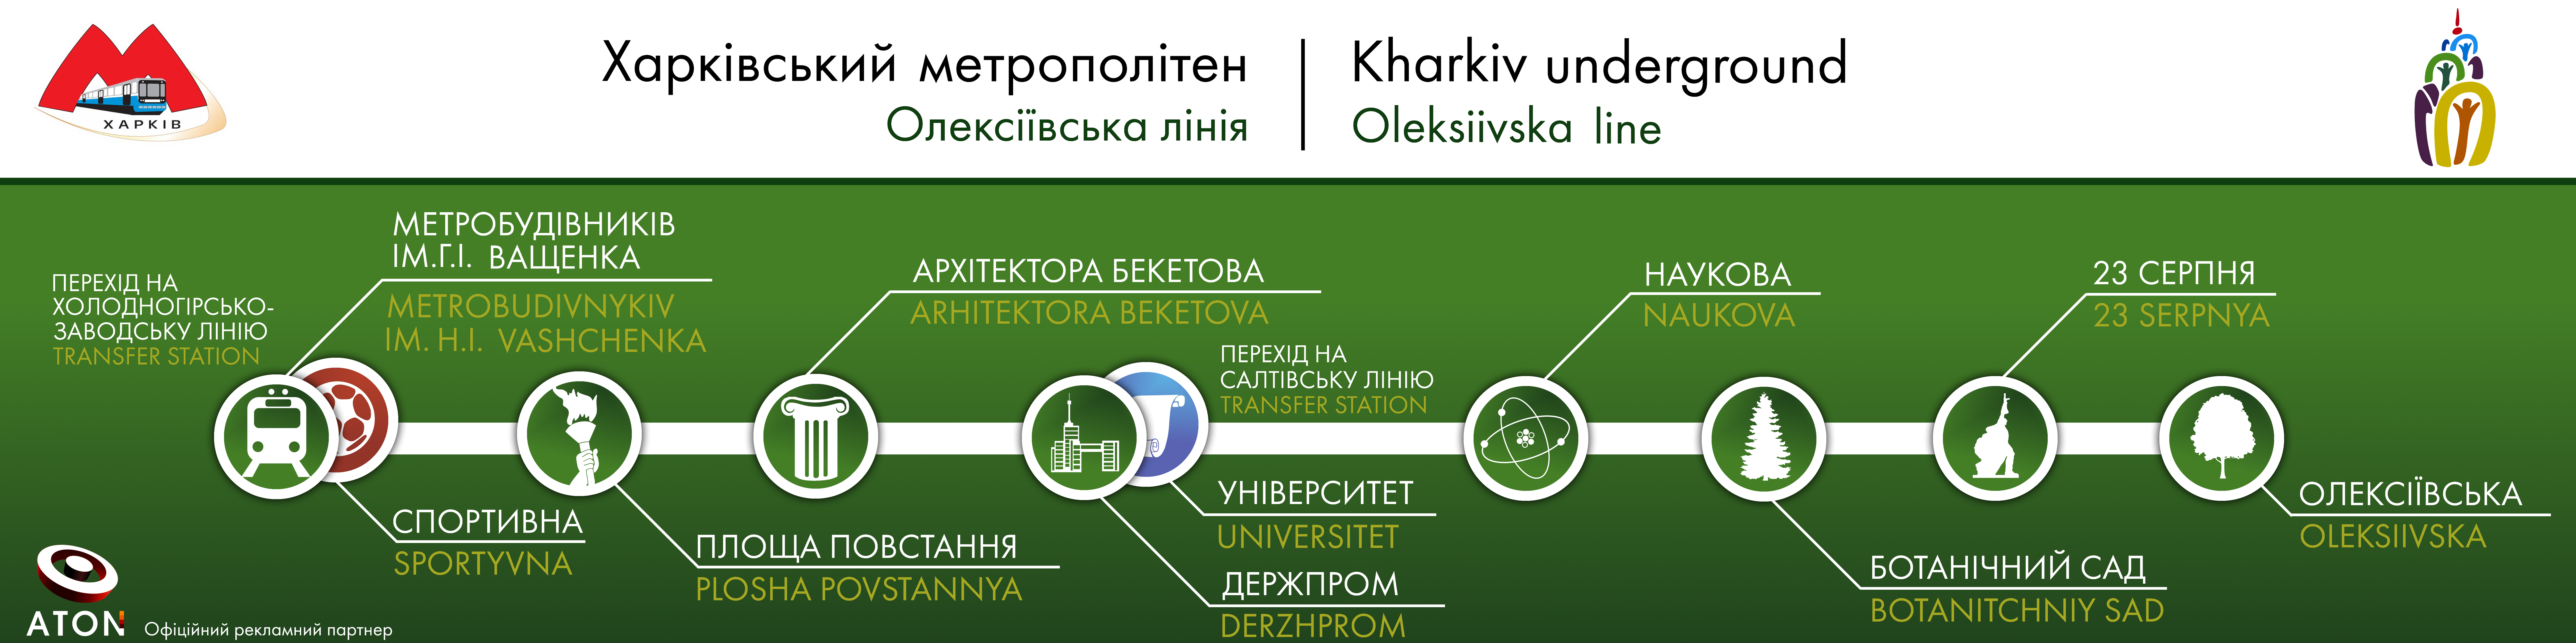 Harkiv — Maps; Harkiv — Metro — Alekseevskaya Line; Harkiv — Metro — Maps; Harkiv — Metro — Miscellaneous photos